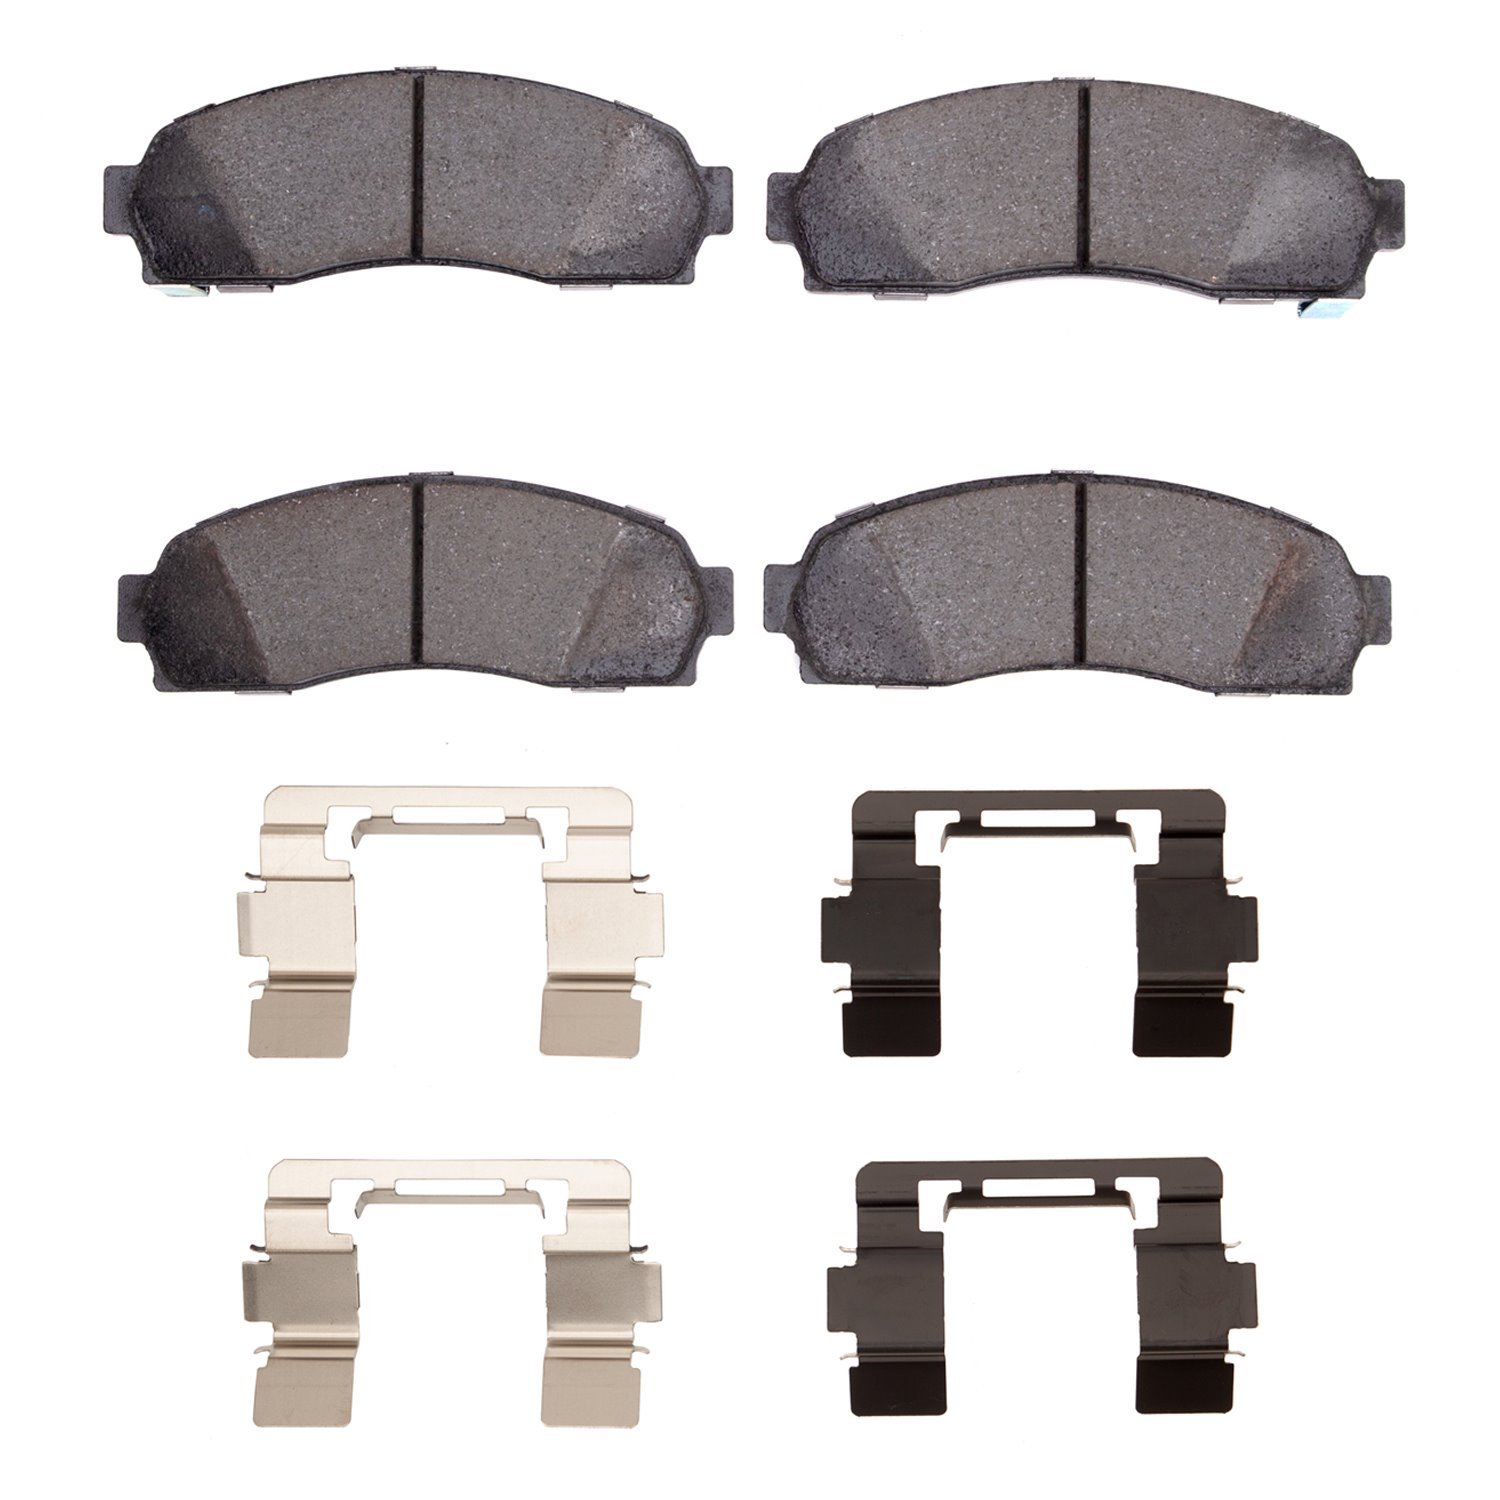 1310-0833-01 3000-Series Ceramic Brake Pads & Hardware Kit, 2002-2012 Multiple Makes/Models, Position: Front